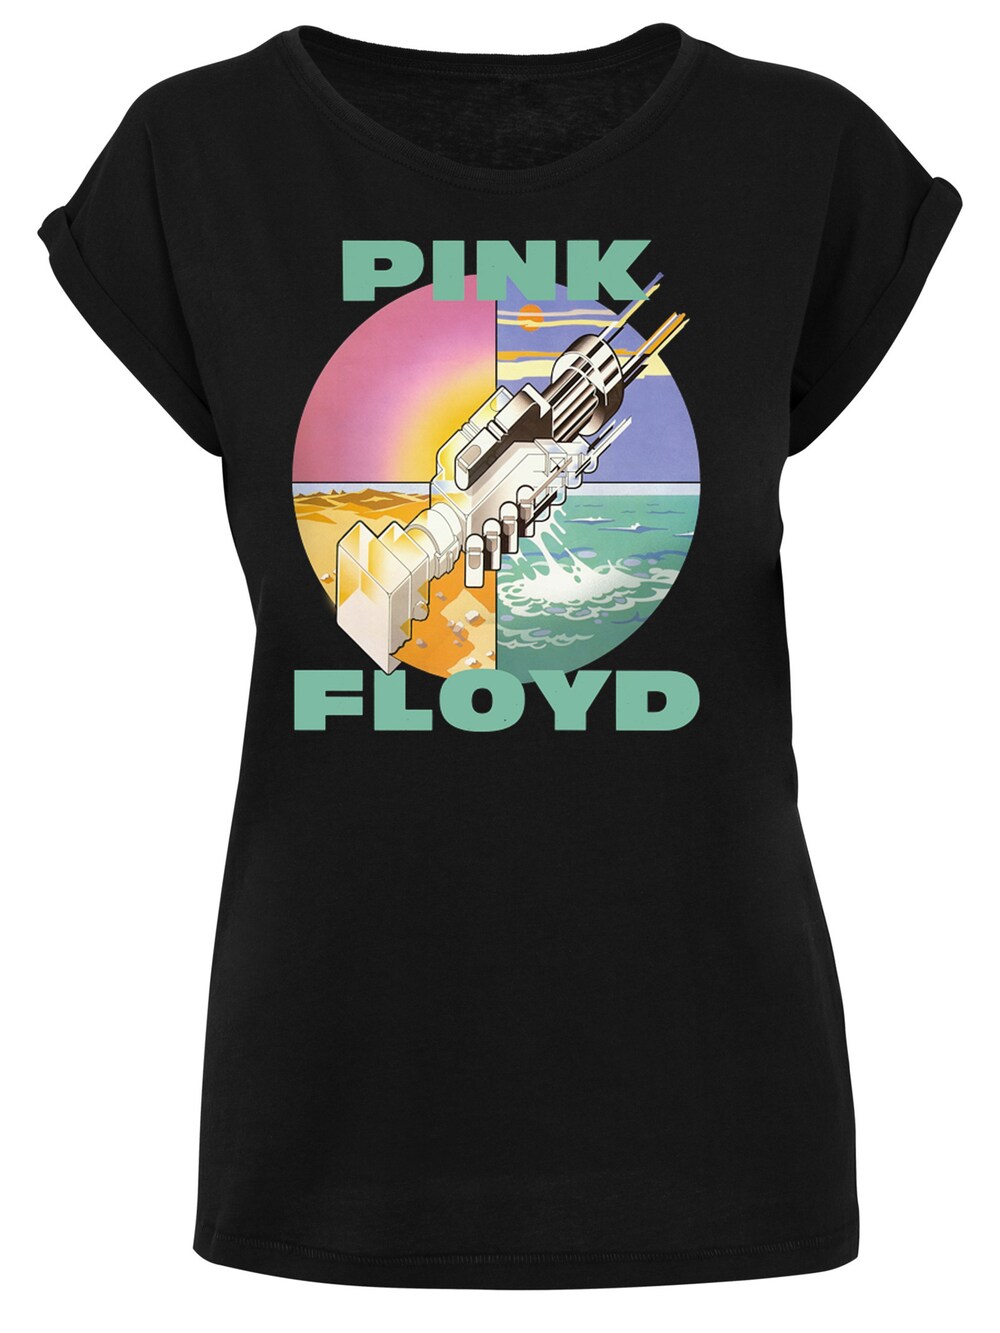 Рубашка F4Nt4Stic Pink Floyd Wish You Were Here, черный толстовка wish you were here pink floyd серый